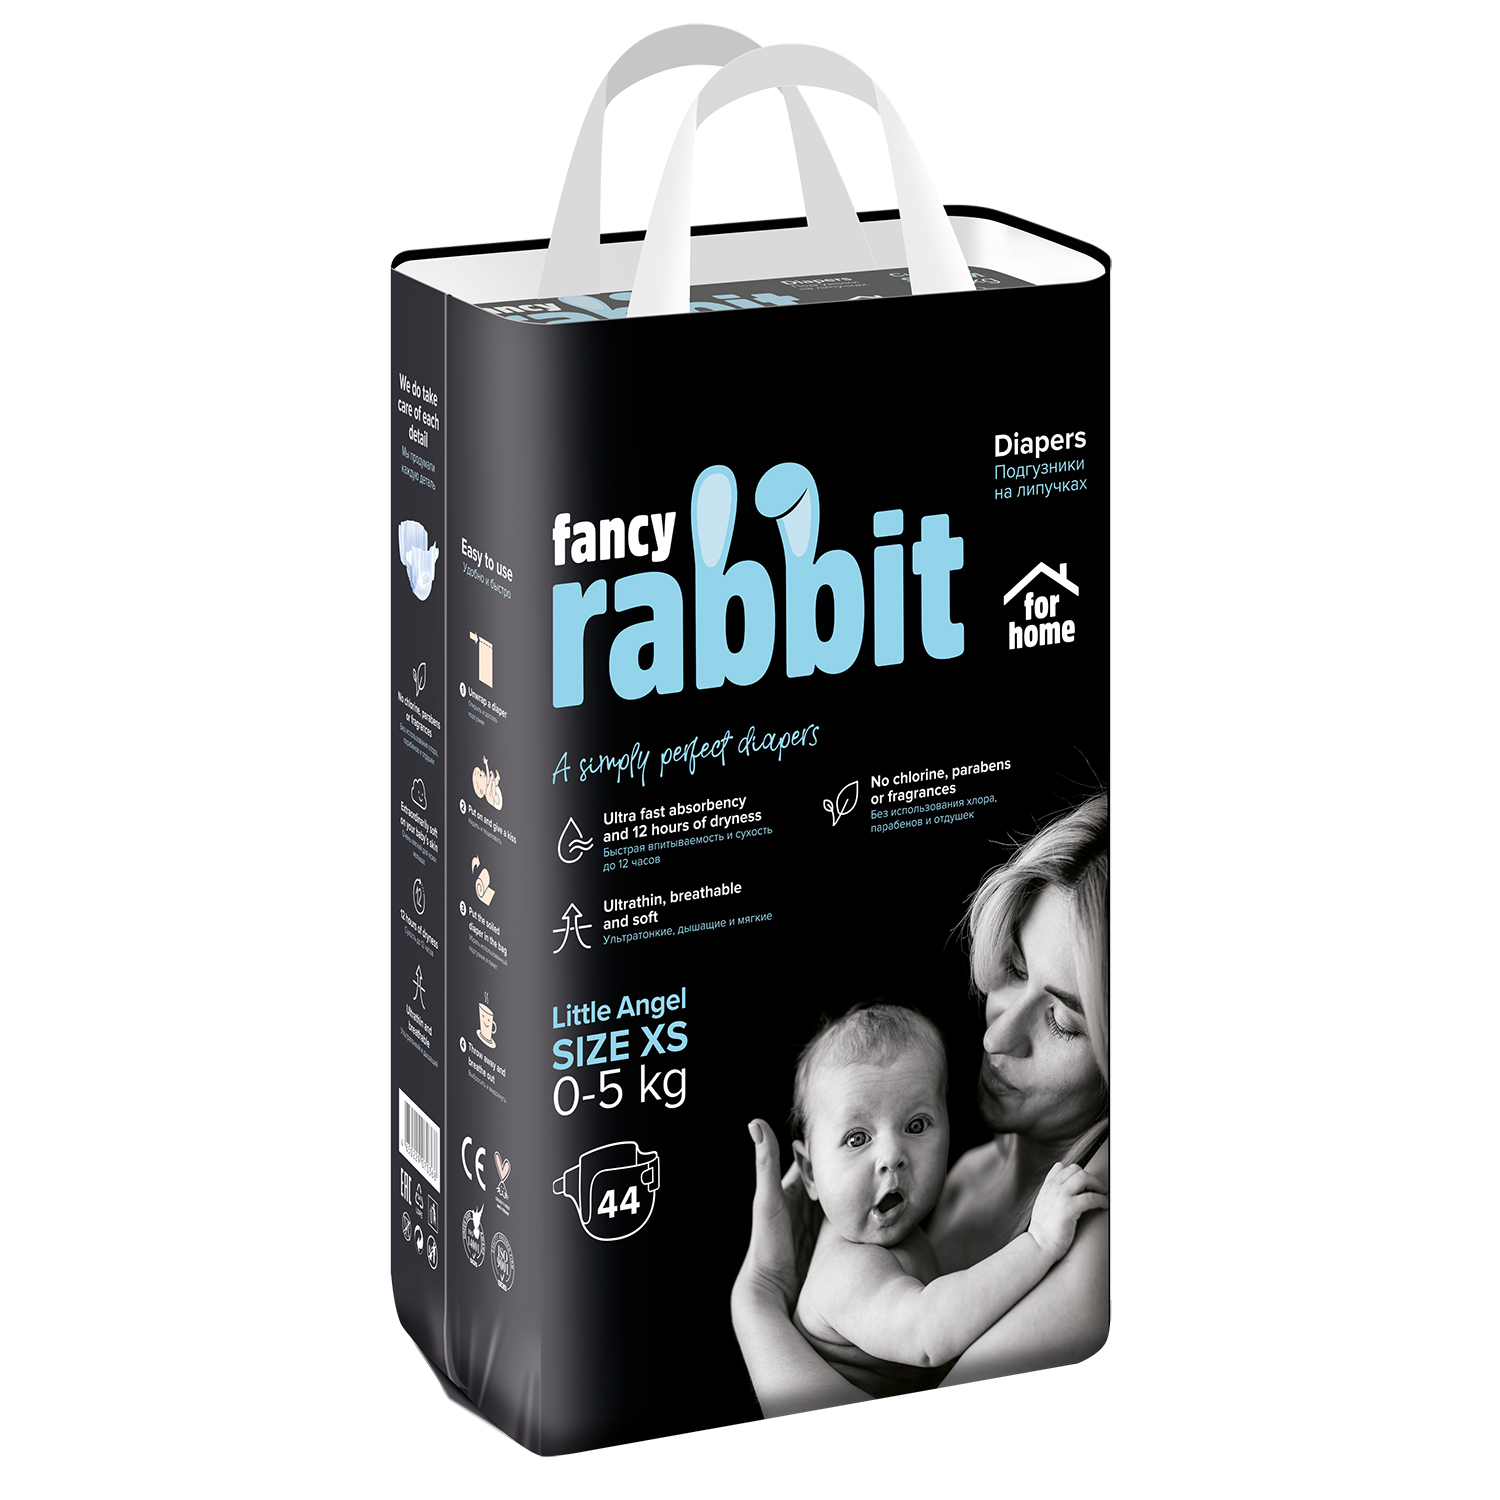 Подгузники Fancy Rabbit for home xs, 0-5 кг, 44 шт цена и фото